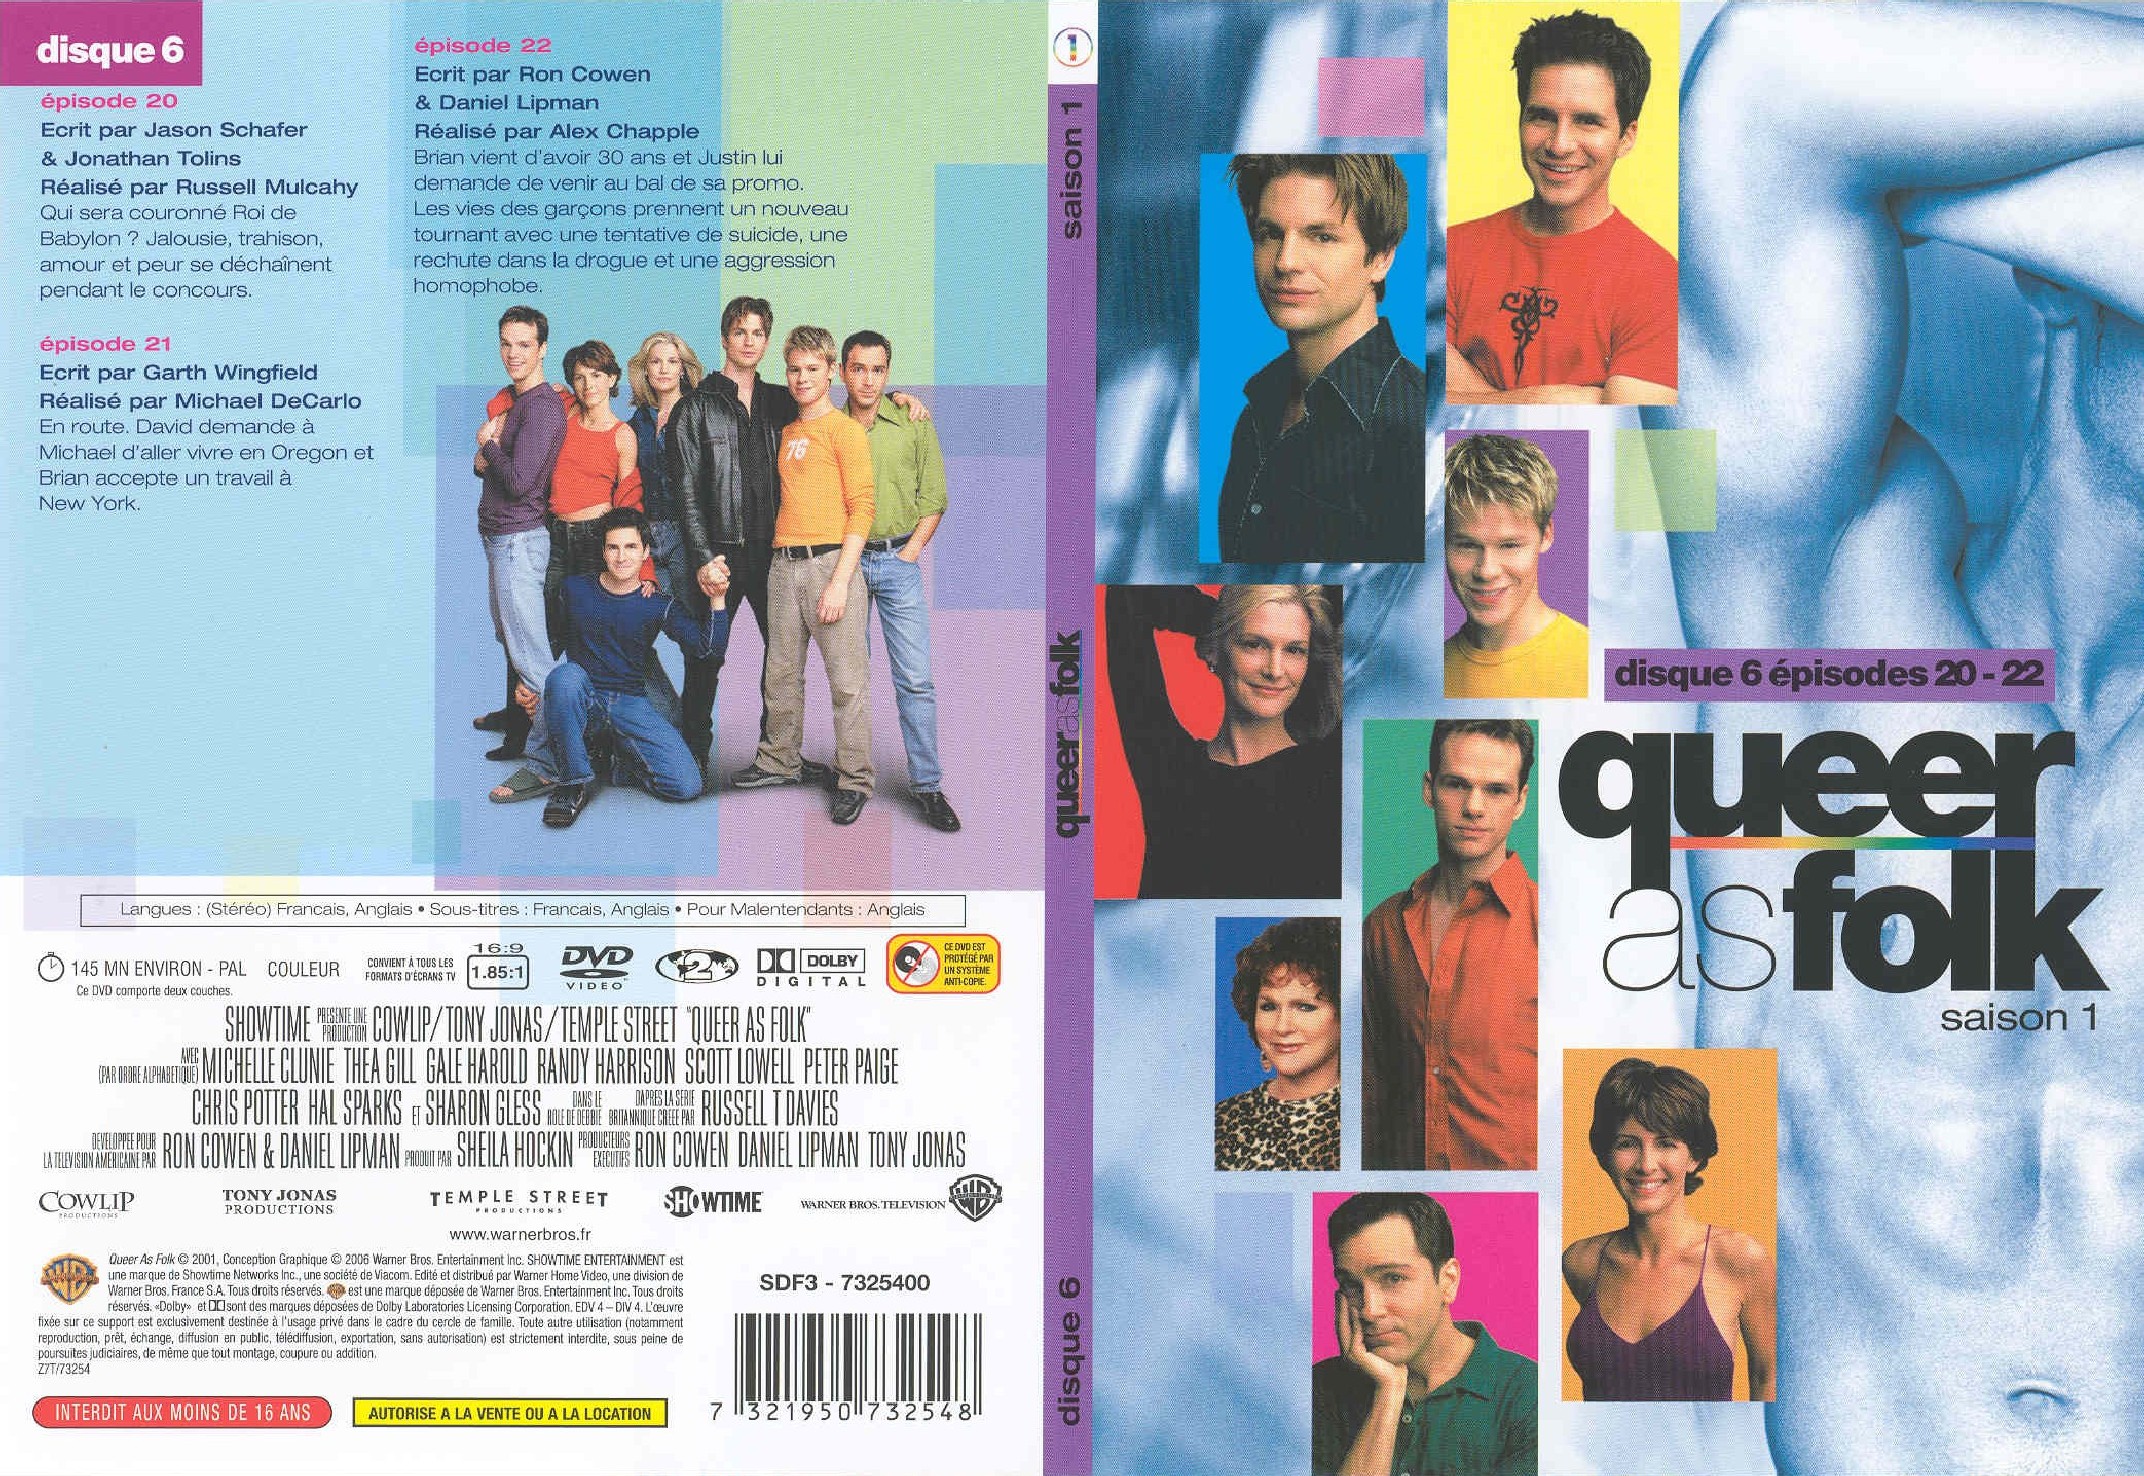 Jaquette DVD Queer As Folk (US) Saison 1 DVD 6